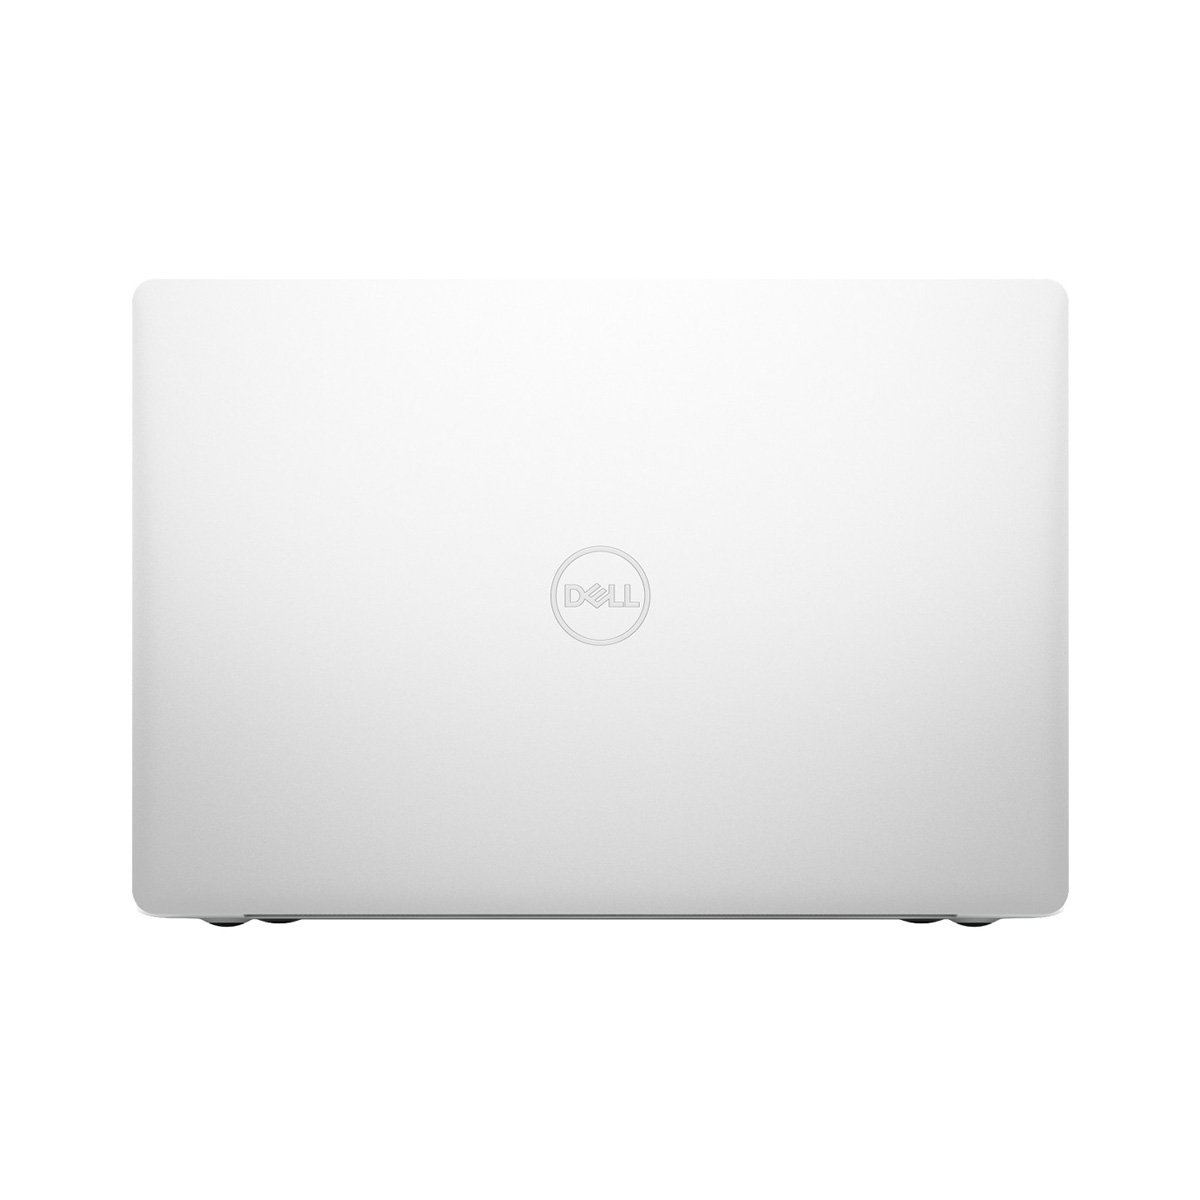 Laptop Inspiron 15-5570 Ci3 Optane Dell